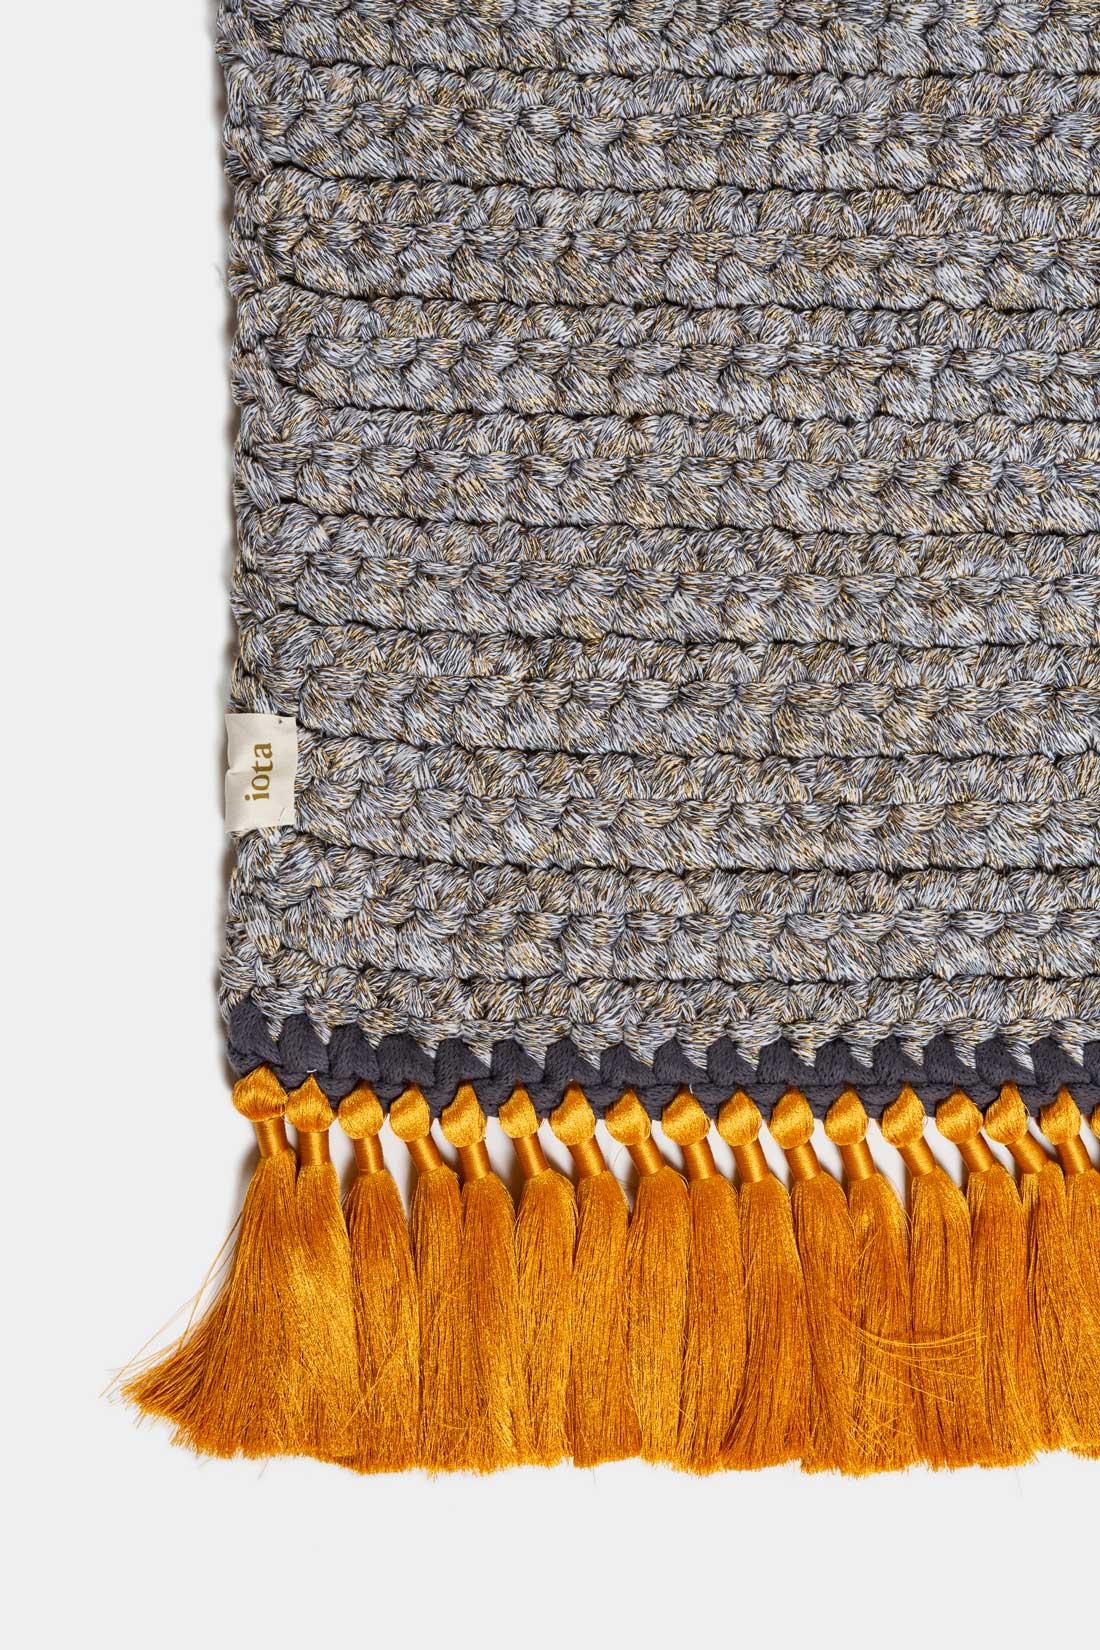 Israeli Handmade Crochet Thick Rug 170x240 cm in Grey Sand with Golden Tassels For Sale